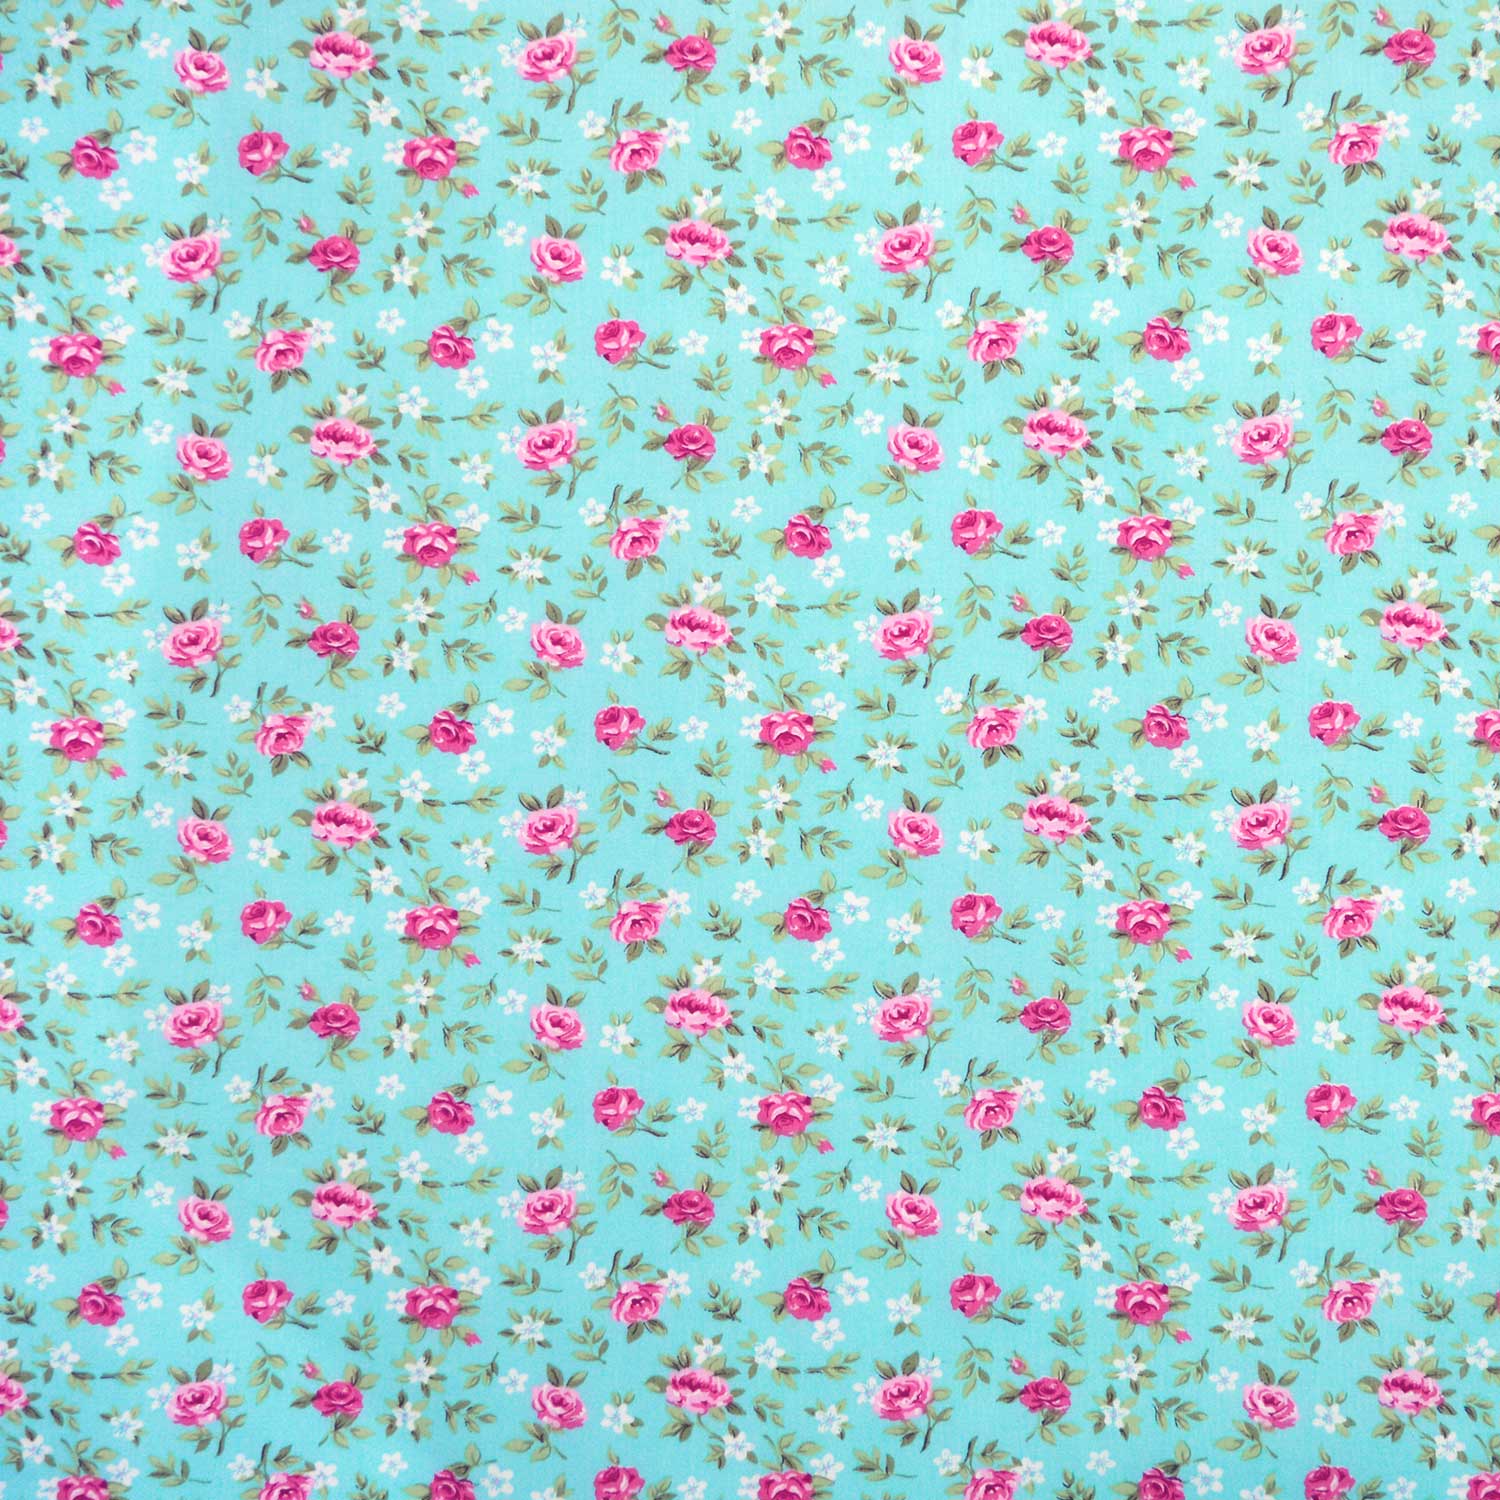 tecido-tricoline-estampado-floral-lucia-rosa-della-aviamentos-tecidos-caldeira-grande-11034